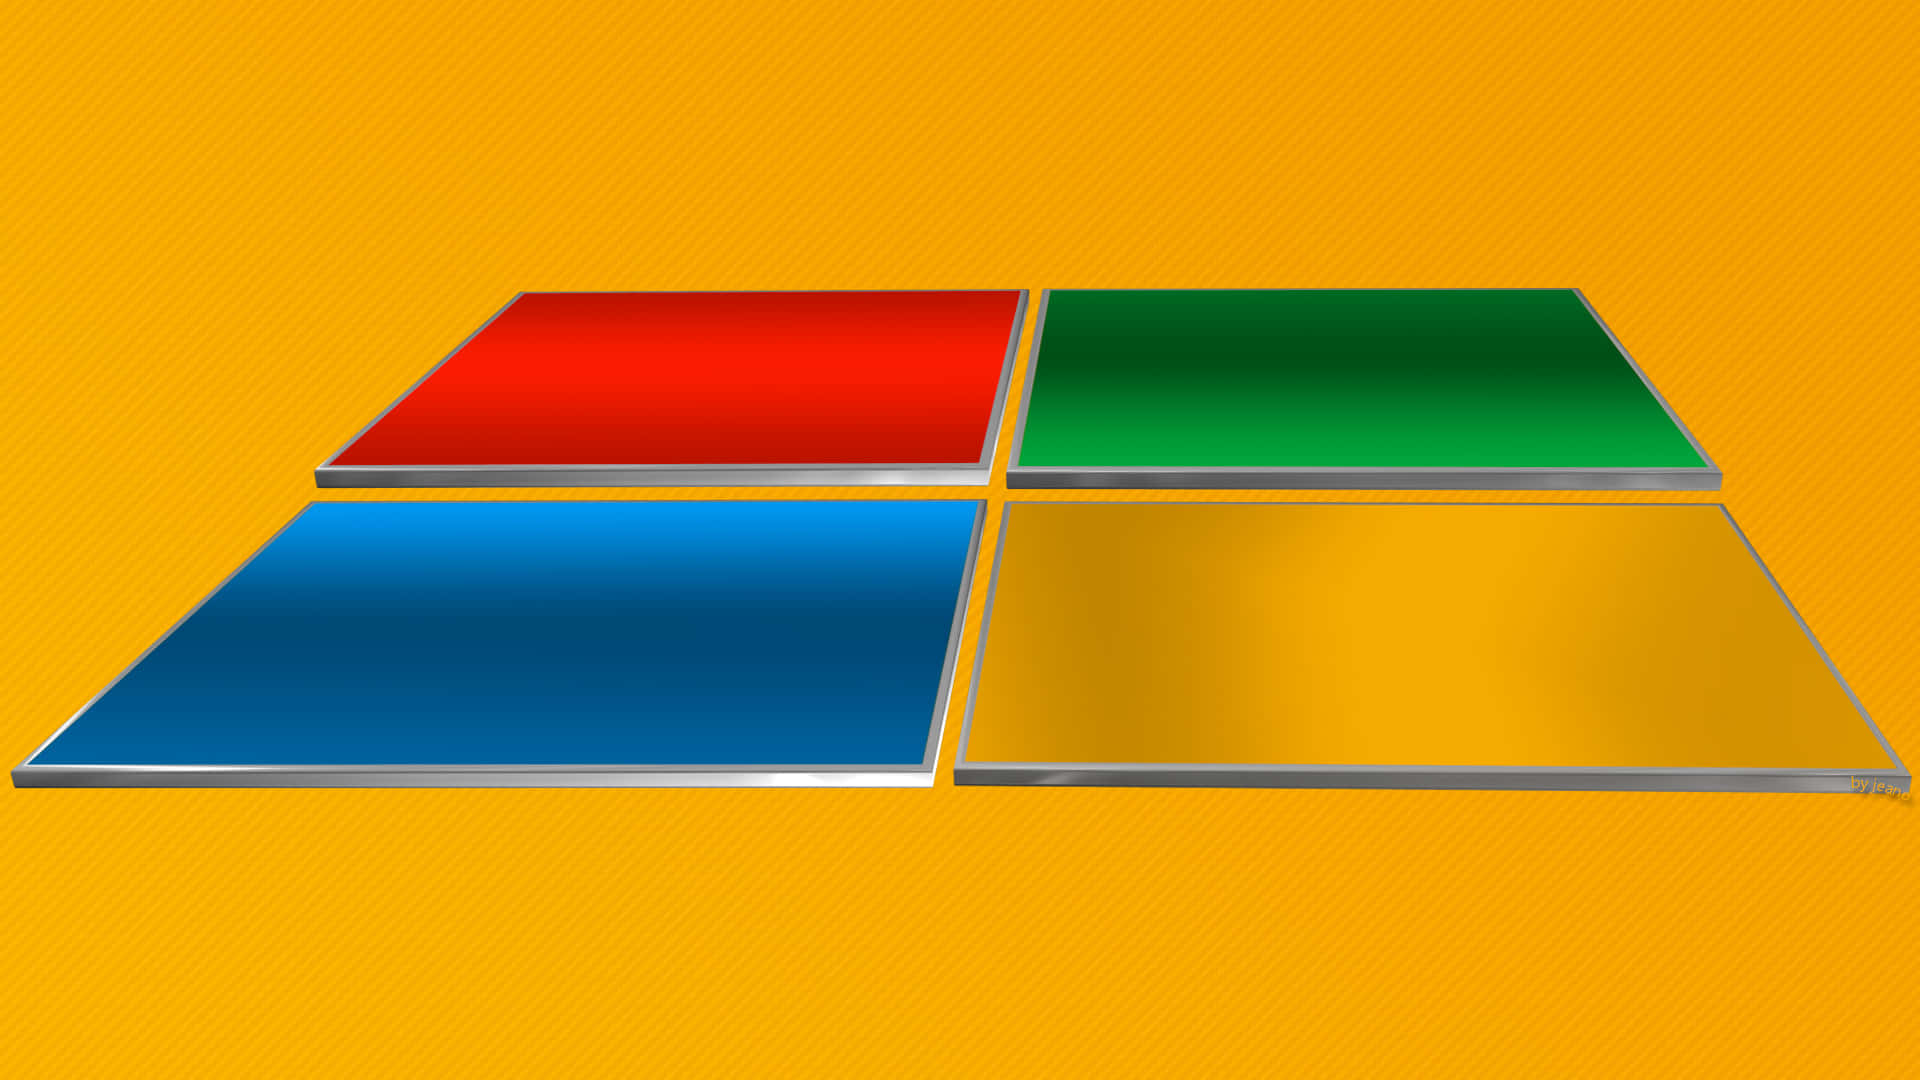 Microsoft Windows 8 Logo On A Yellow Background